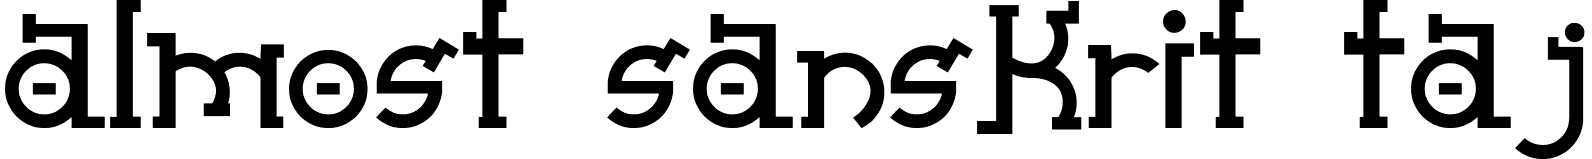 Almost Sanskrit taj font - Almost_Sanskrit_Taj.ttf